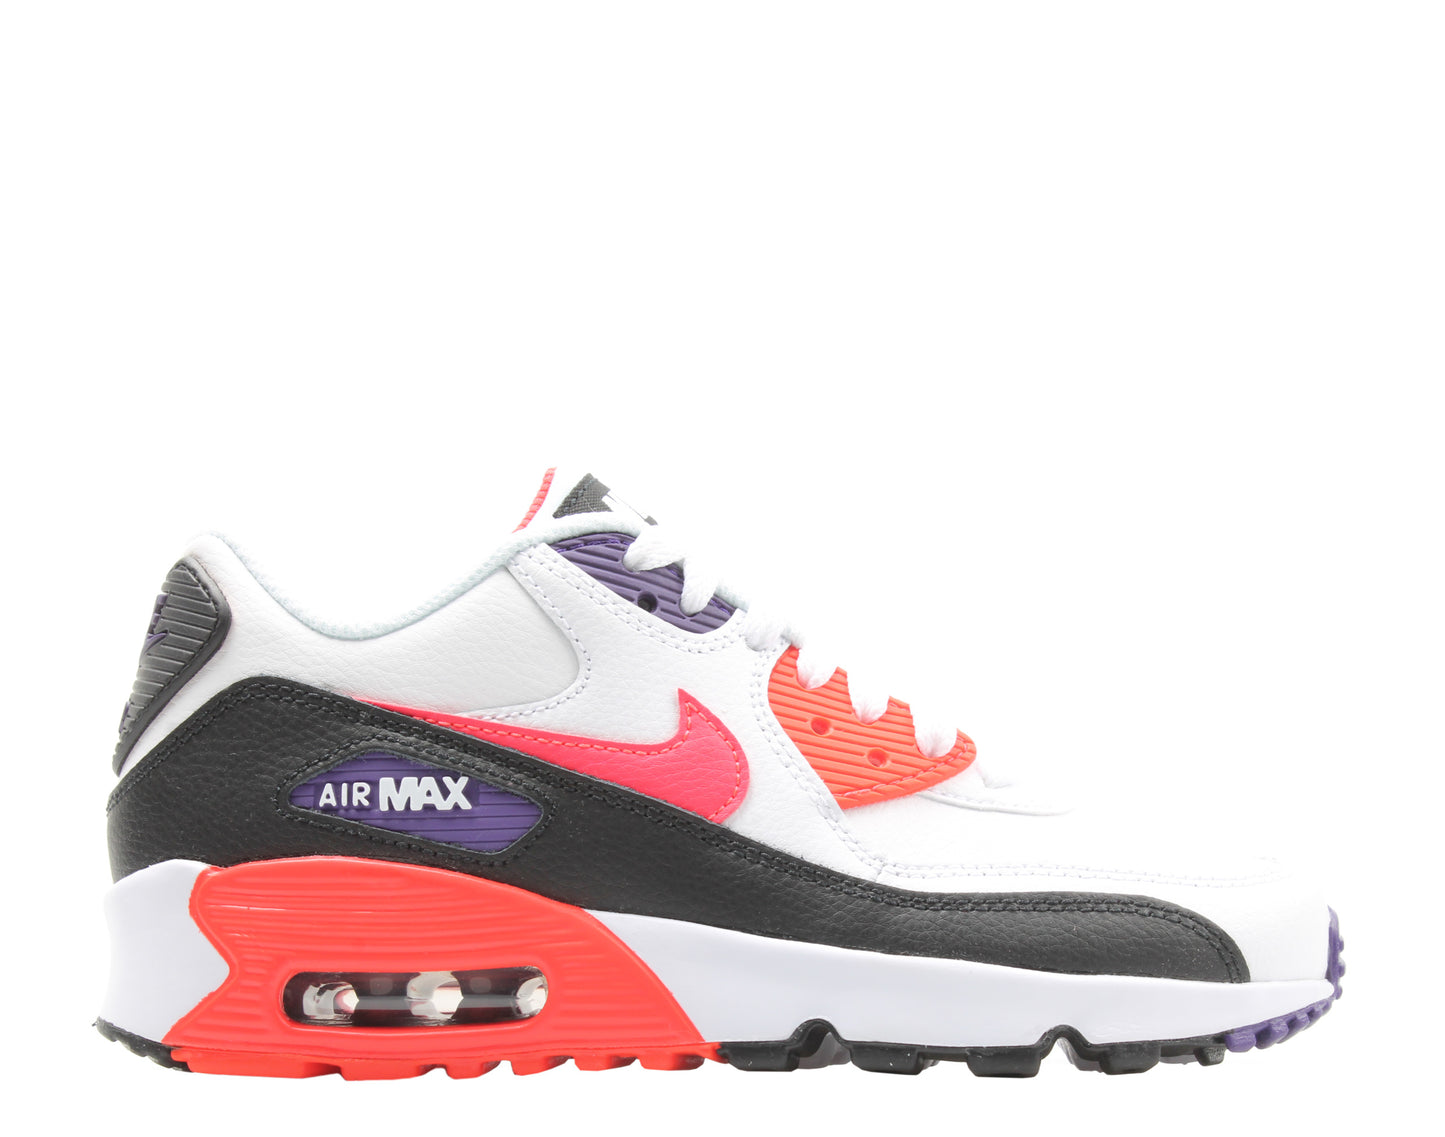 Nike Air Max 90 LTR (GS) White/Crimson-Black Big Kid's Running Shoes 833412-117